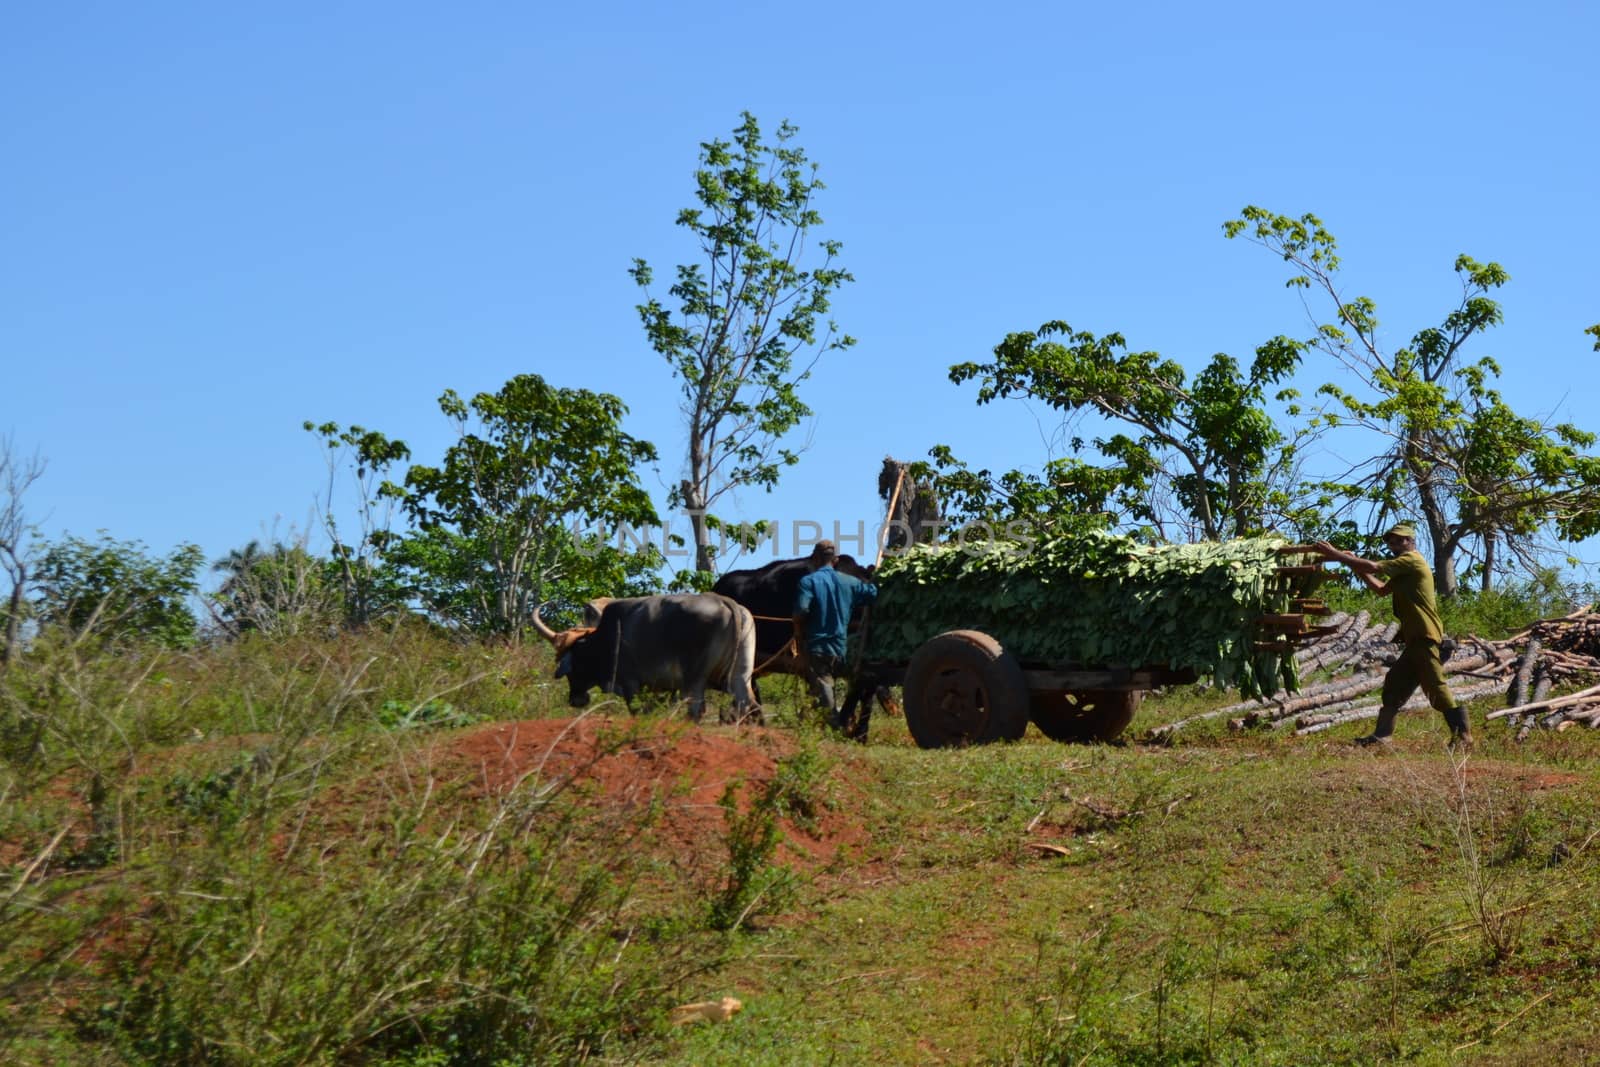 Cuban farmers harvesting tobacco crop in a field in vinales by kb79